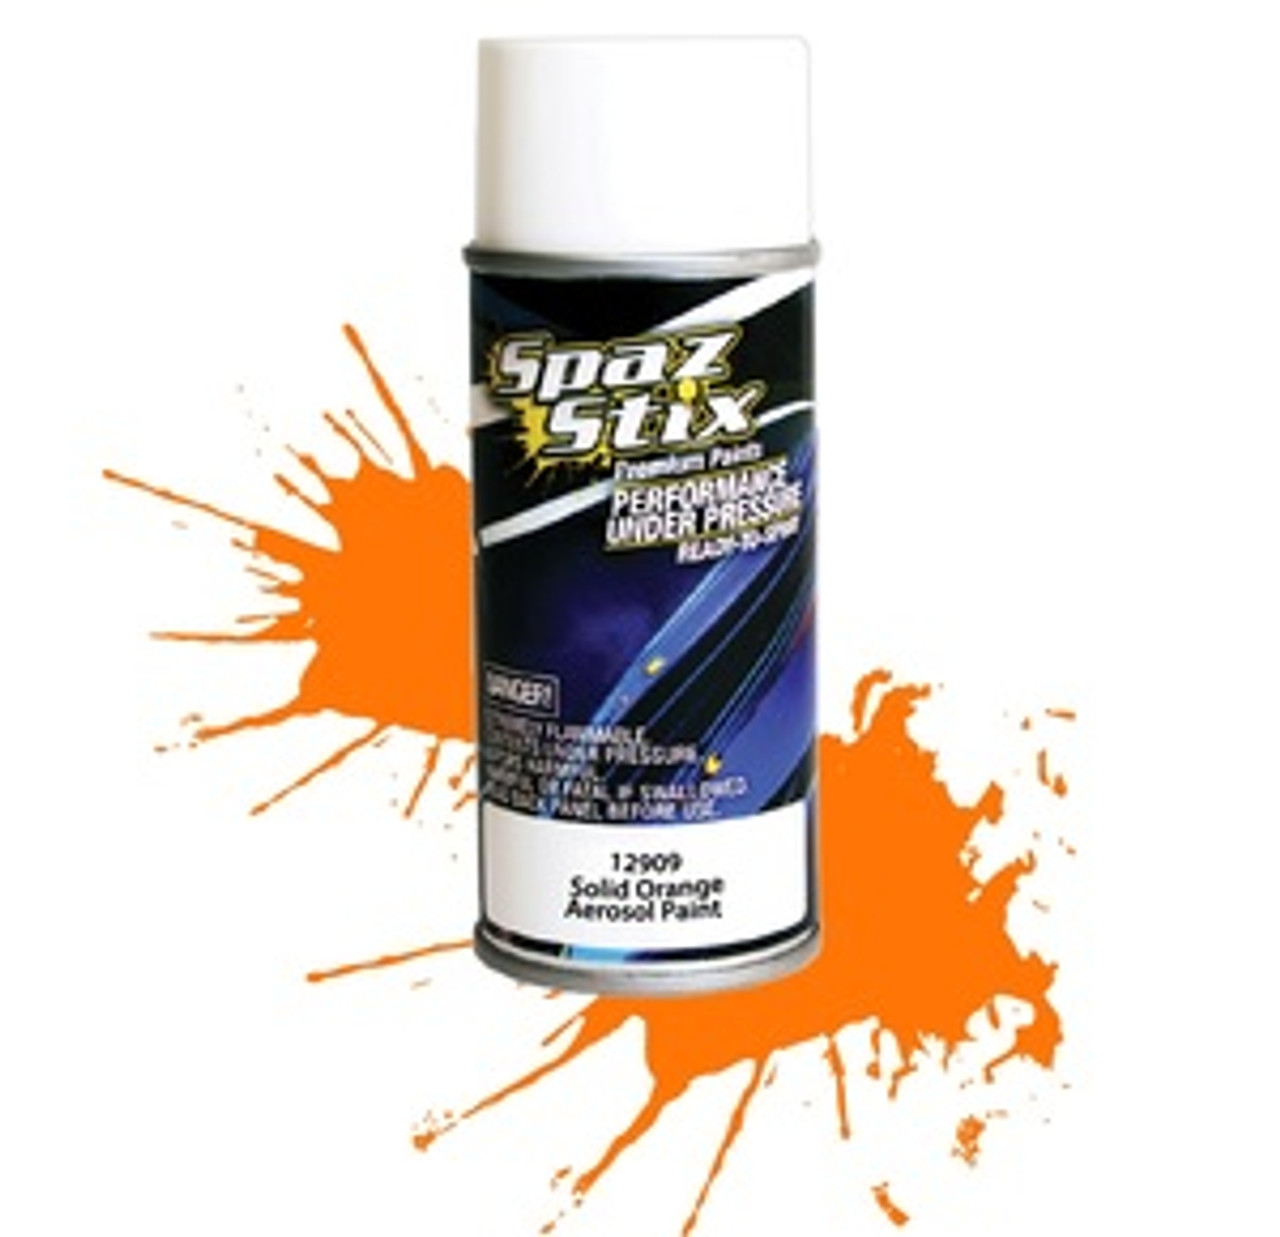 SPAZ STIX Solid Orange Aerosol Paint, 3.5oz Can